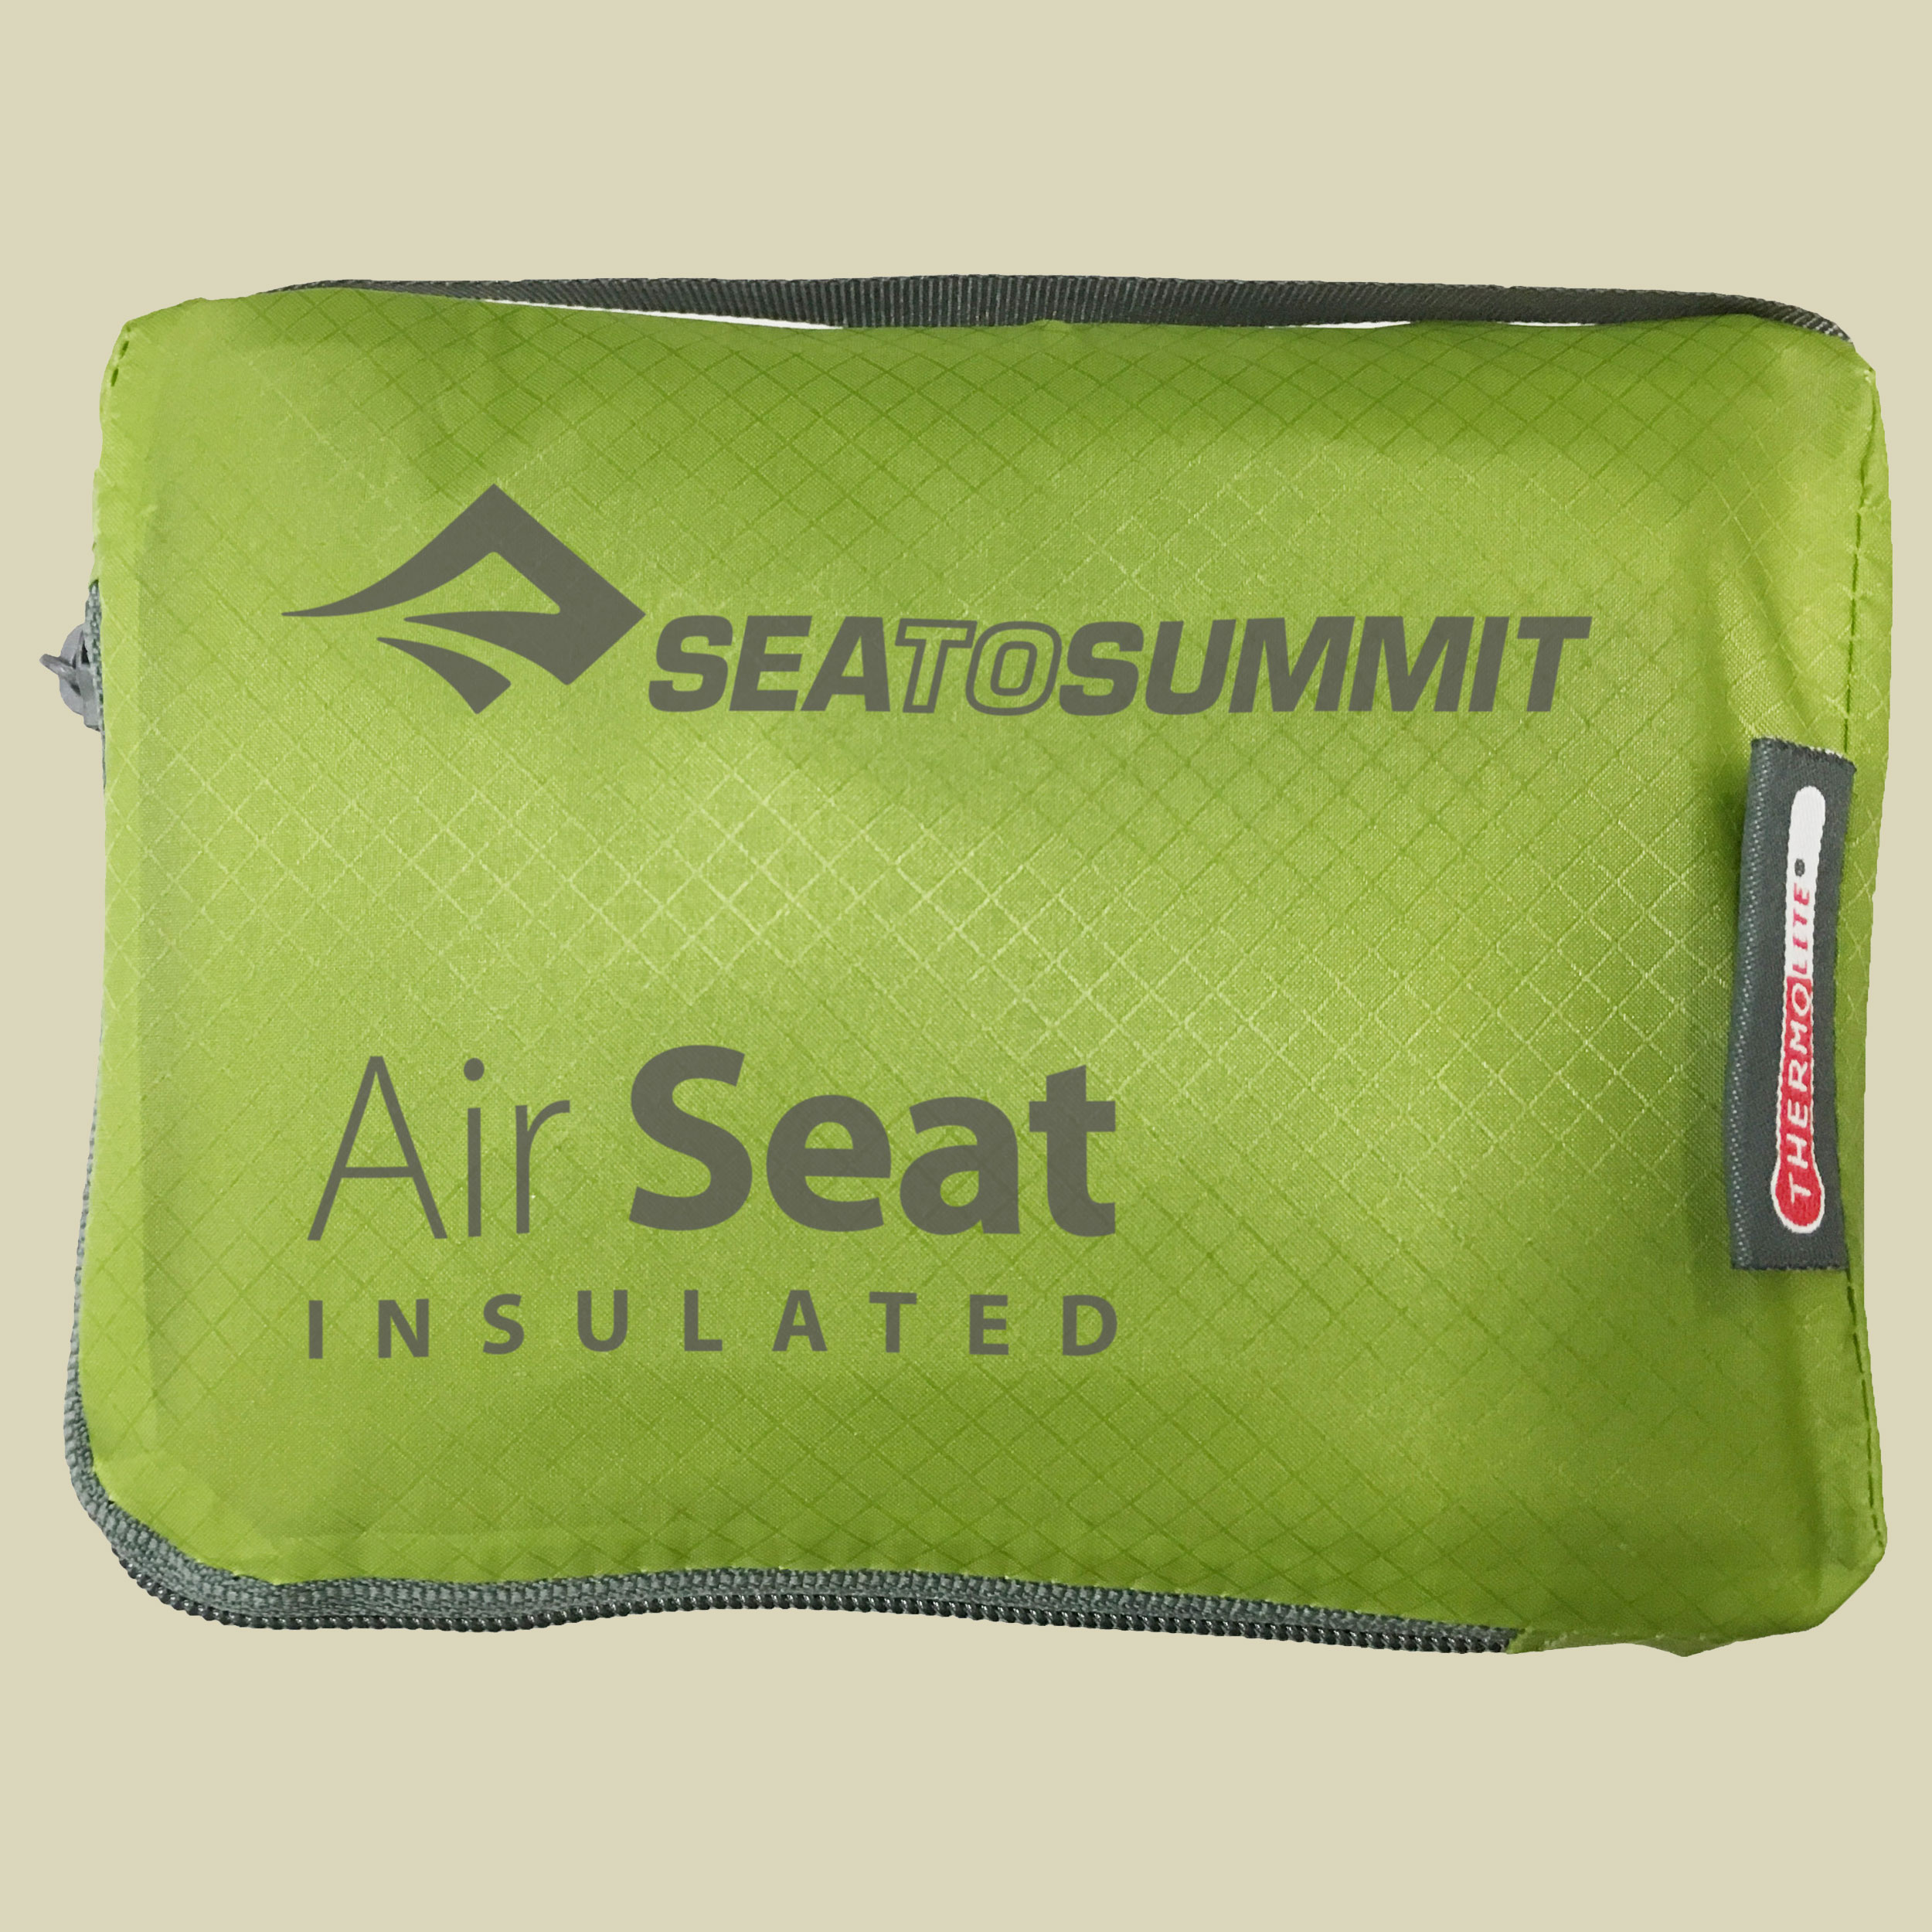 Air Seat Insulated Maße 30 x 28 x 6 cm Farbe lime